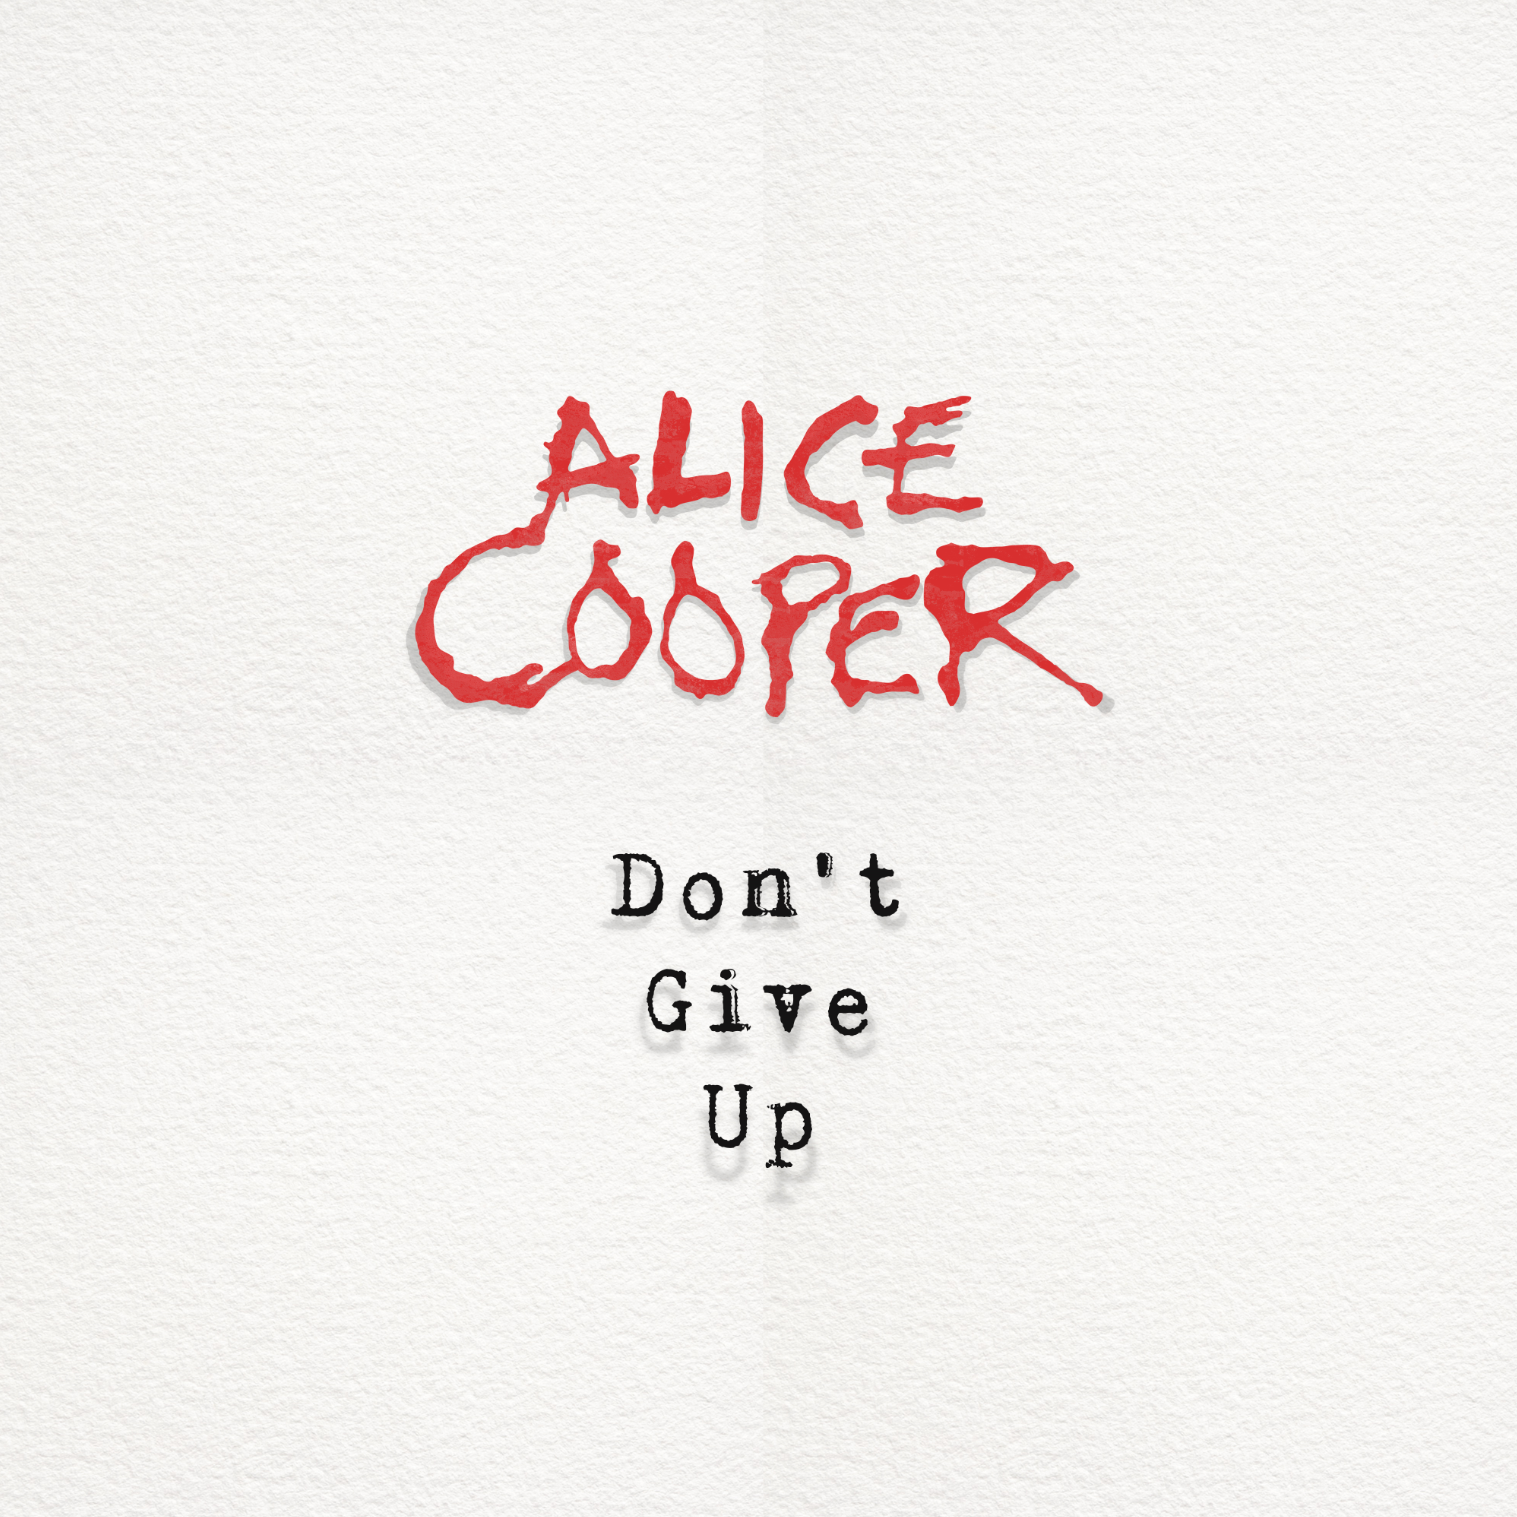 Донт гив ап. Alice Cooper_don't give up [2020]. Обложка сингла. Alice Cooper Paranormal picture Disk.